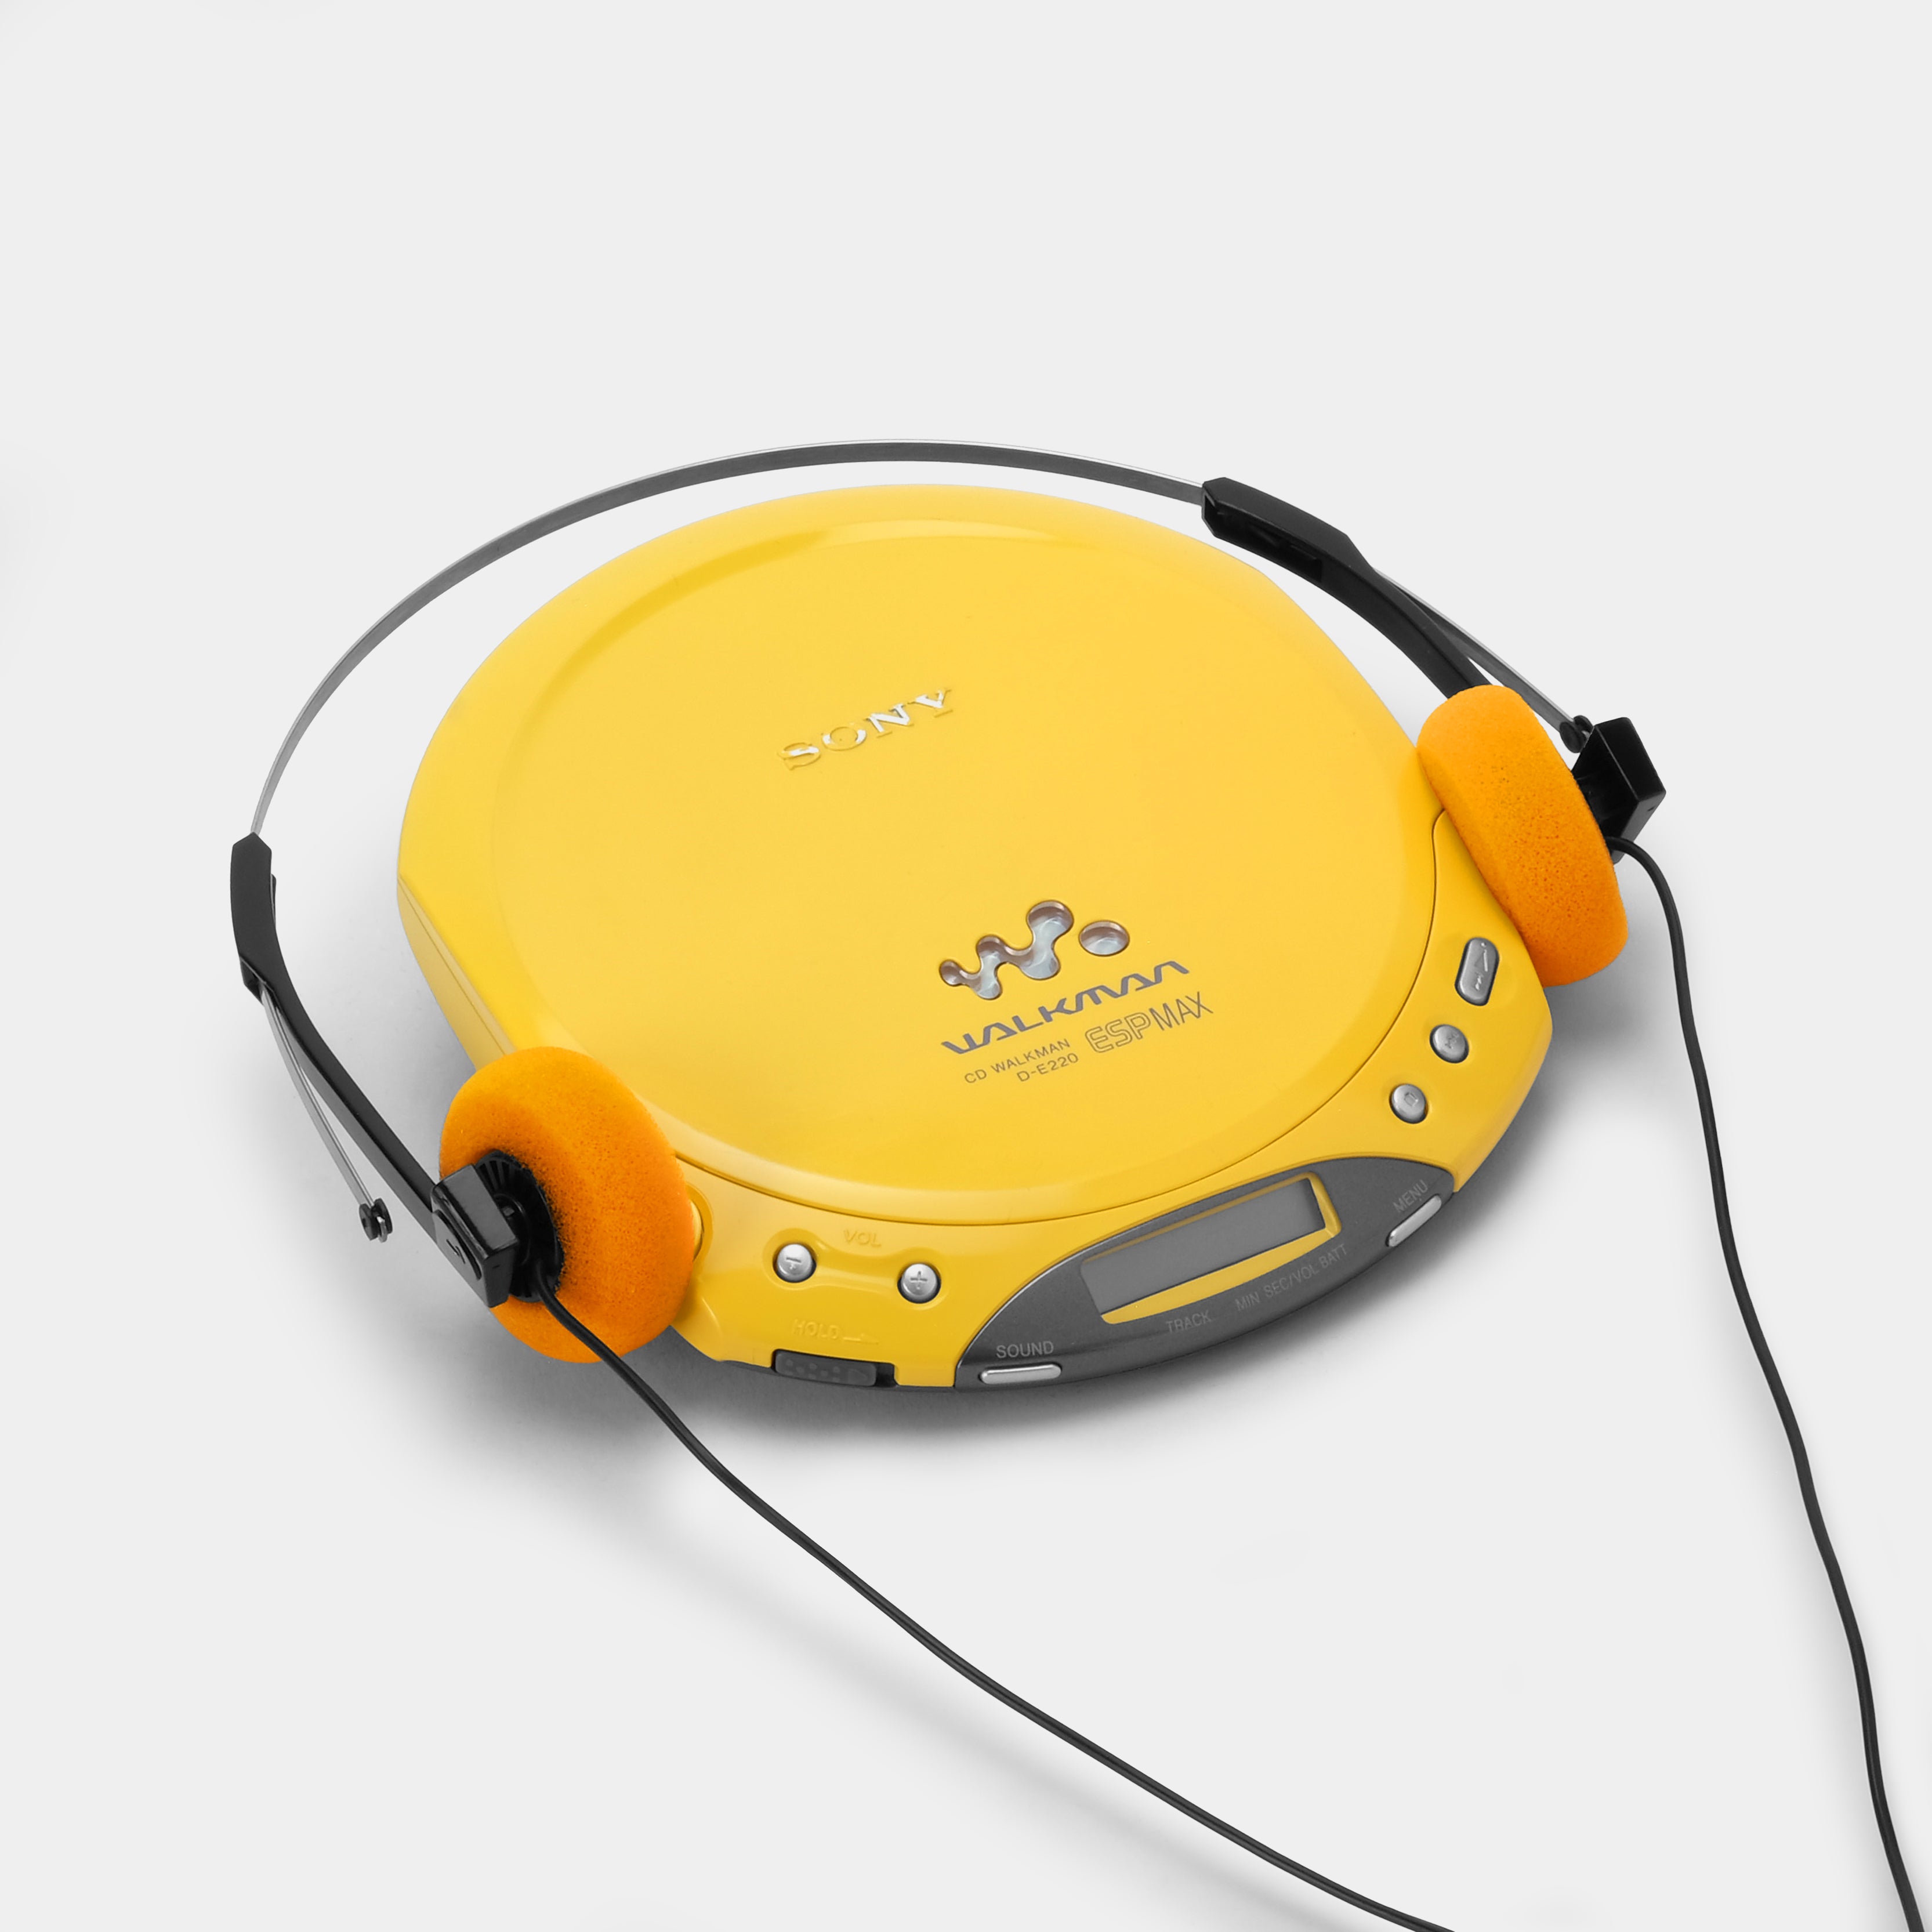 Sony D-E220 Portable CD Player